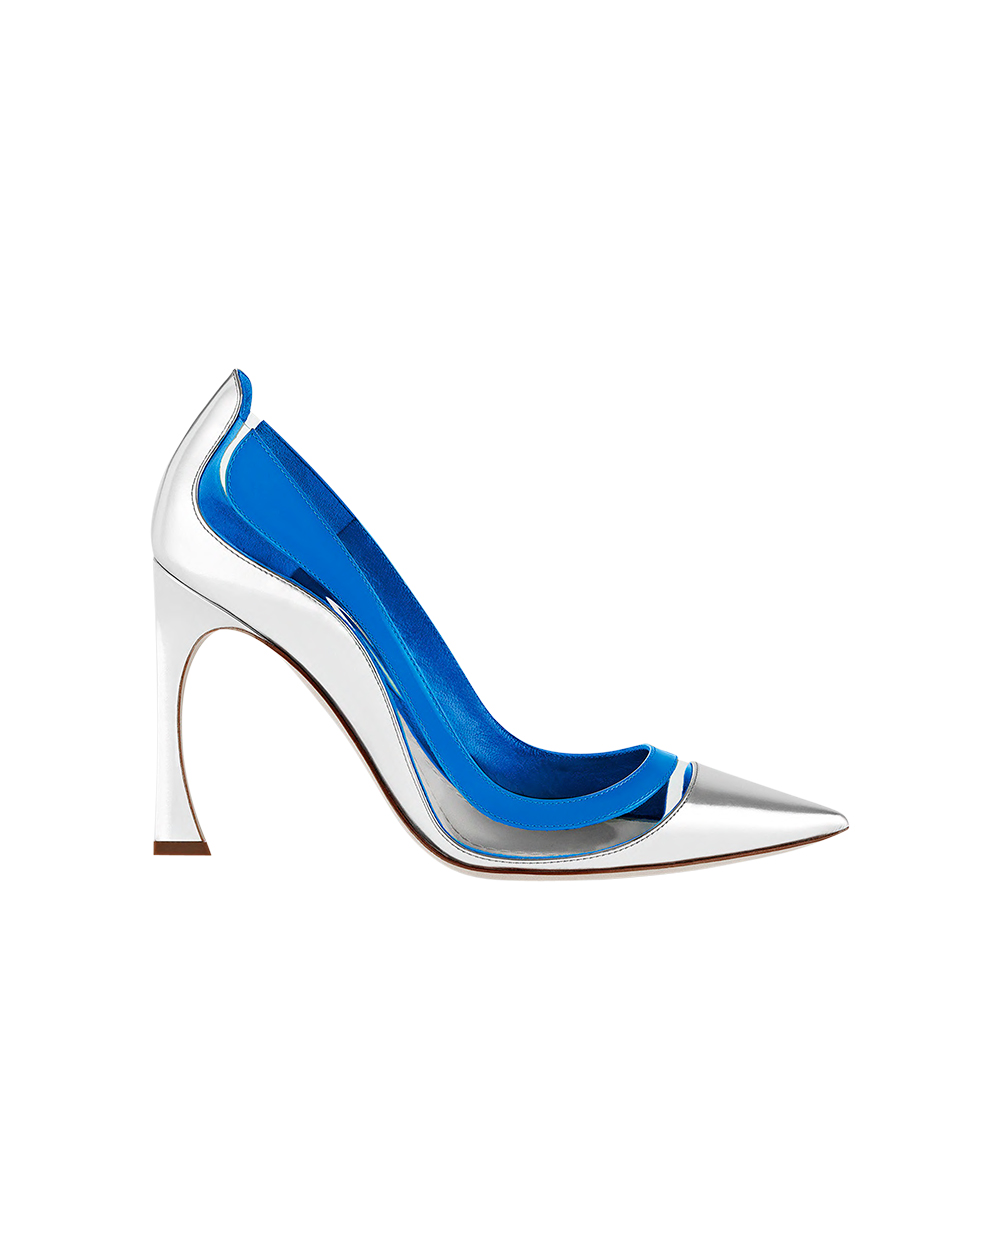 Christian Dior heels, $1200